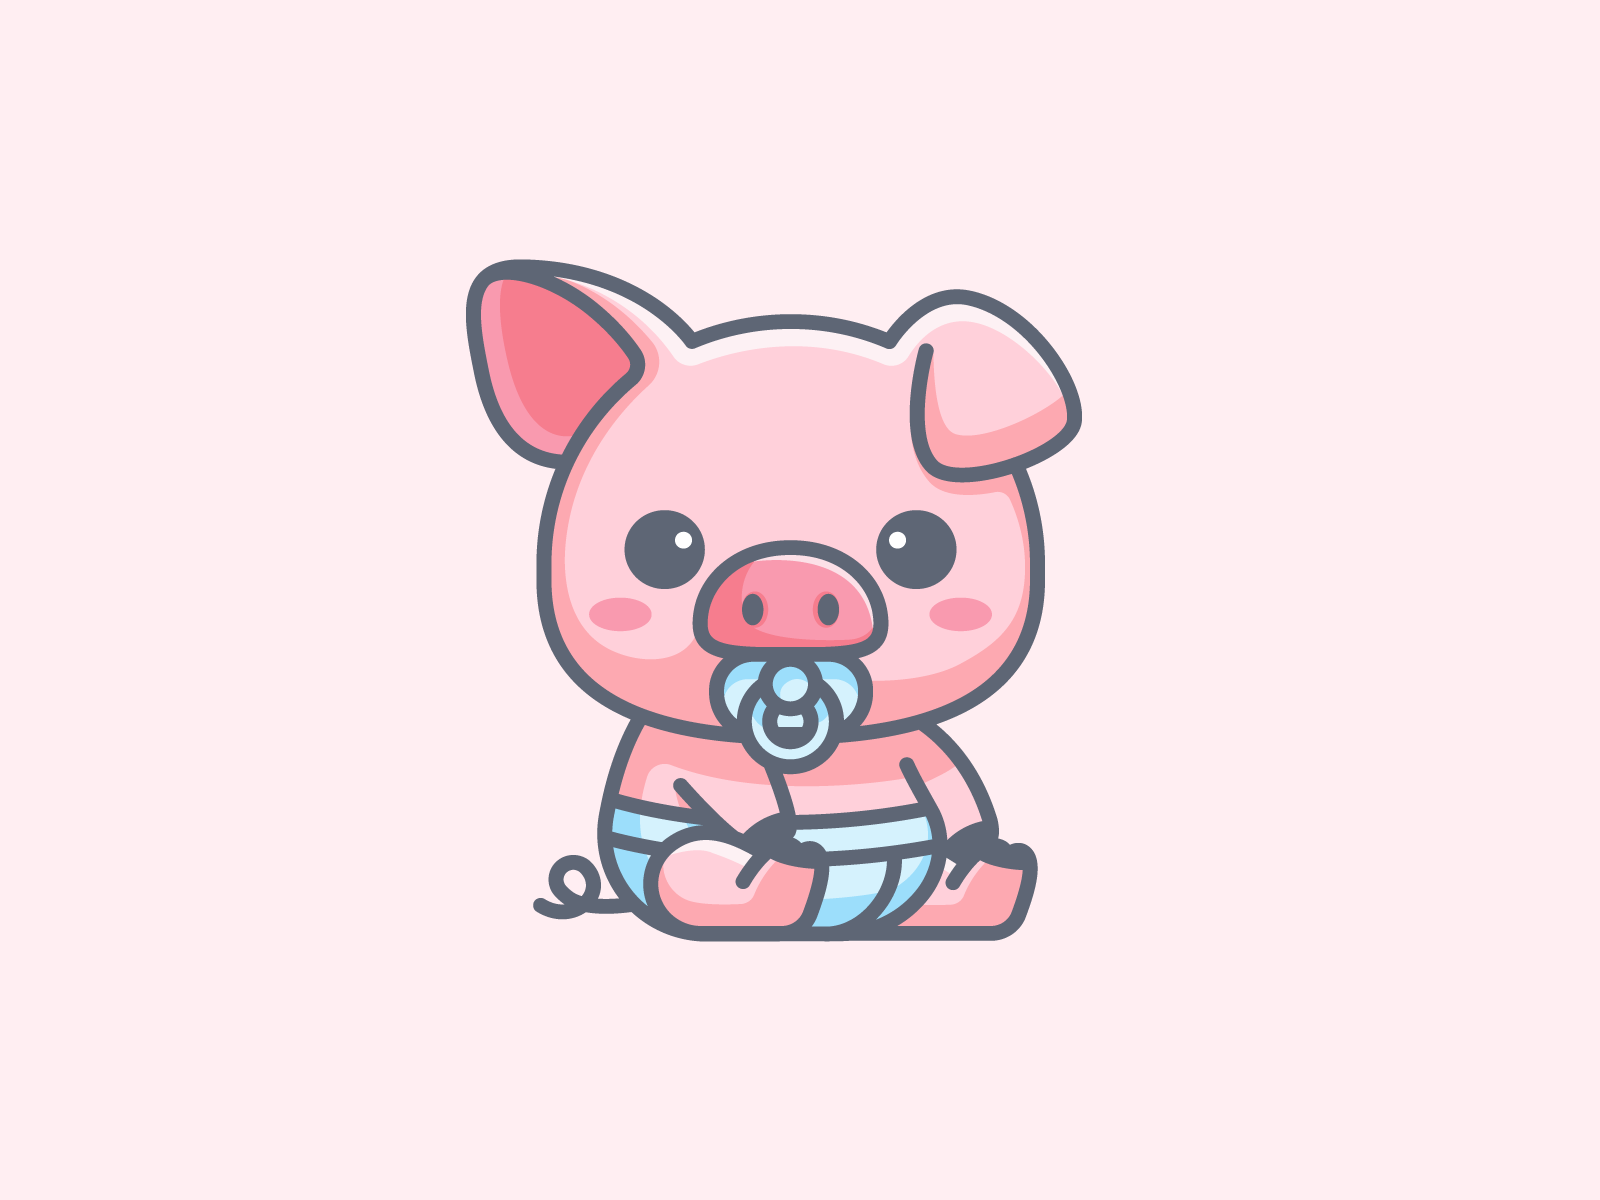 cute pig cartoon images